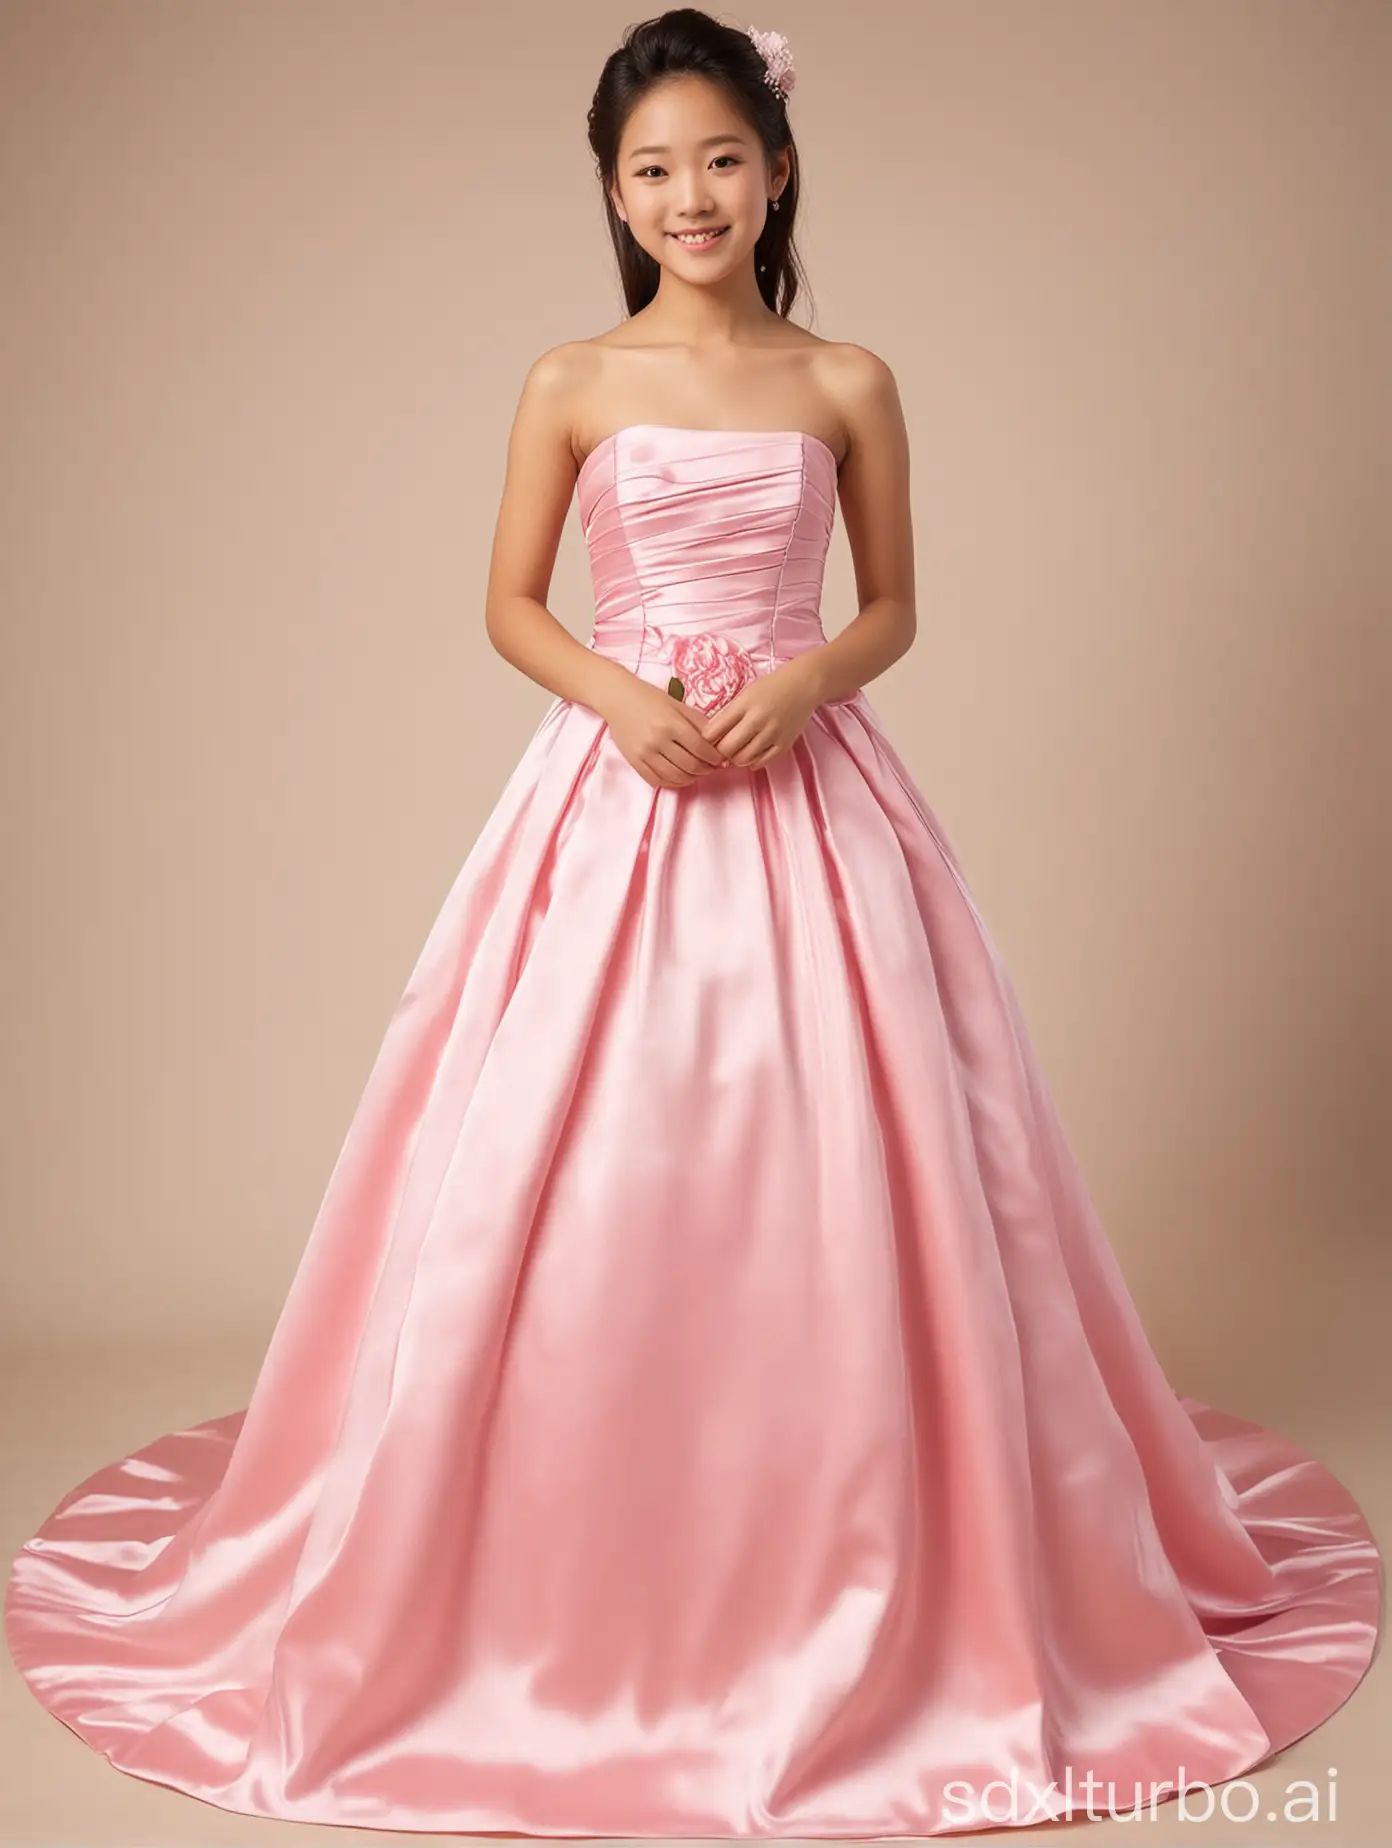 12yo,1girl,Japanese,pink strapless wedding dress,full body